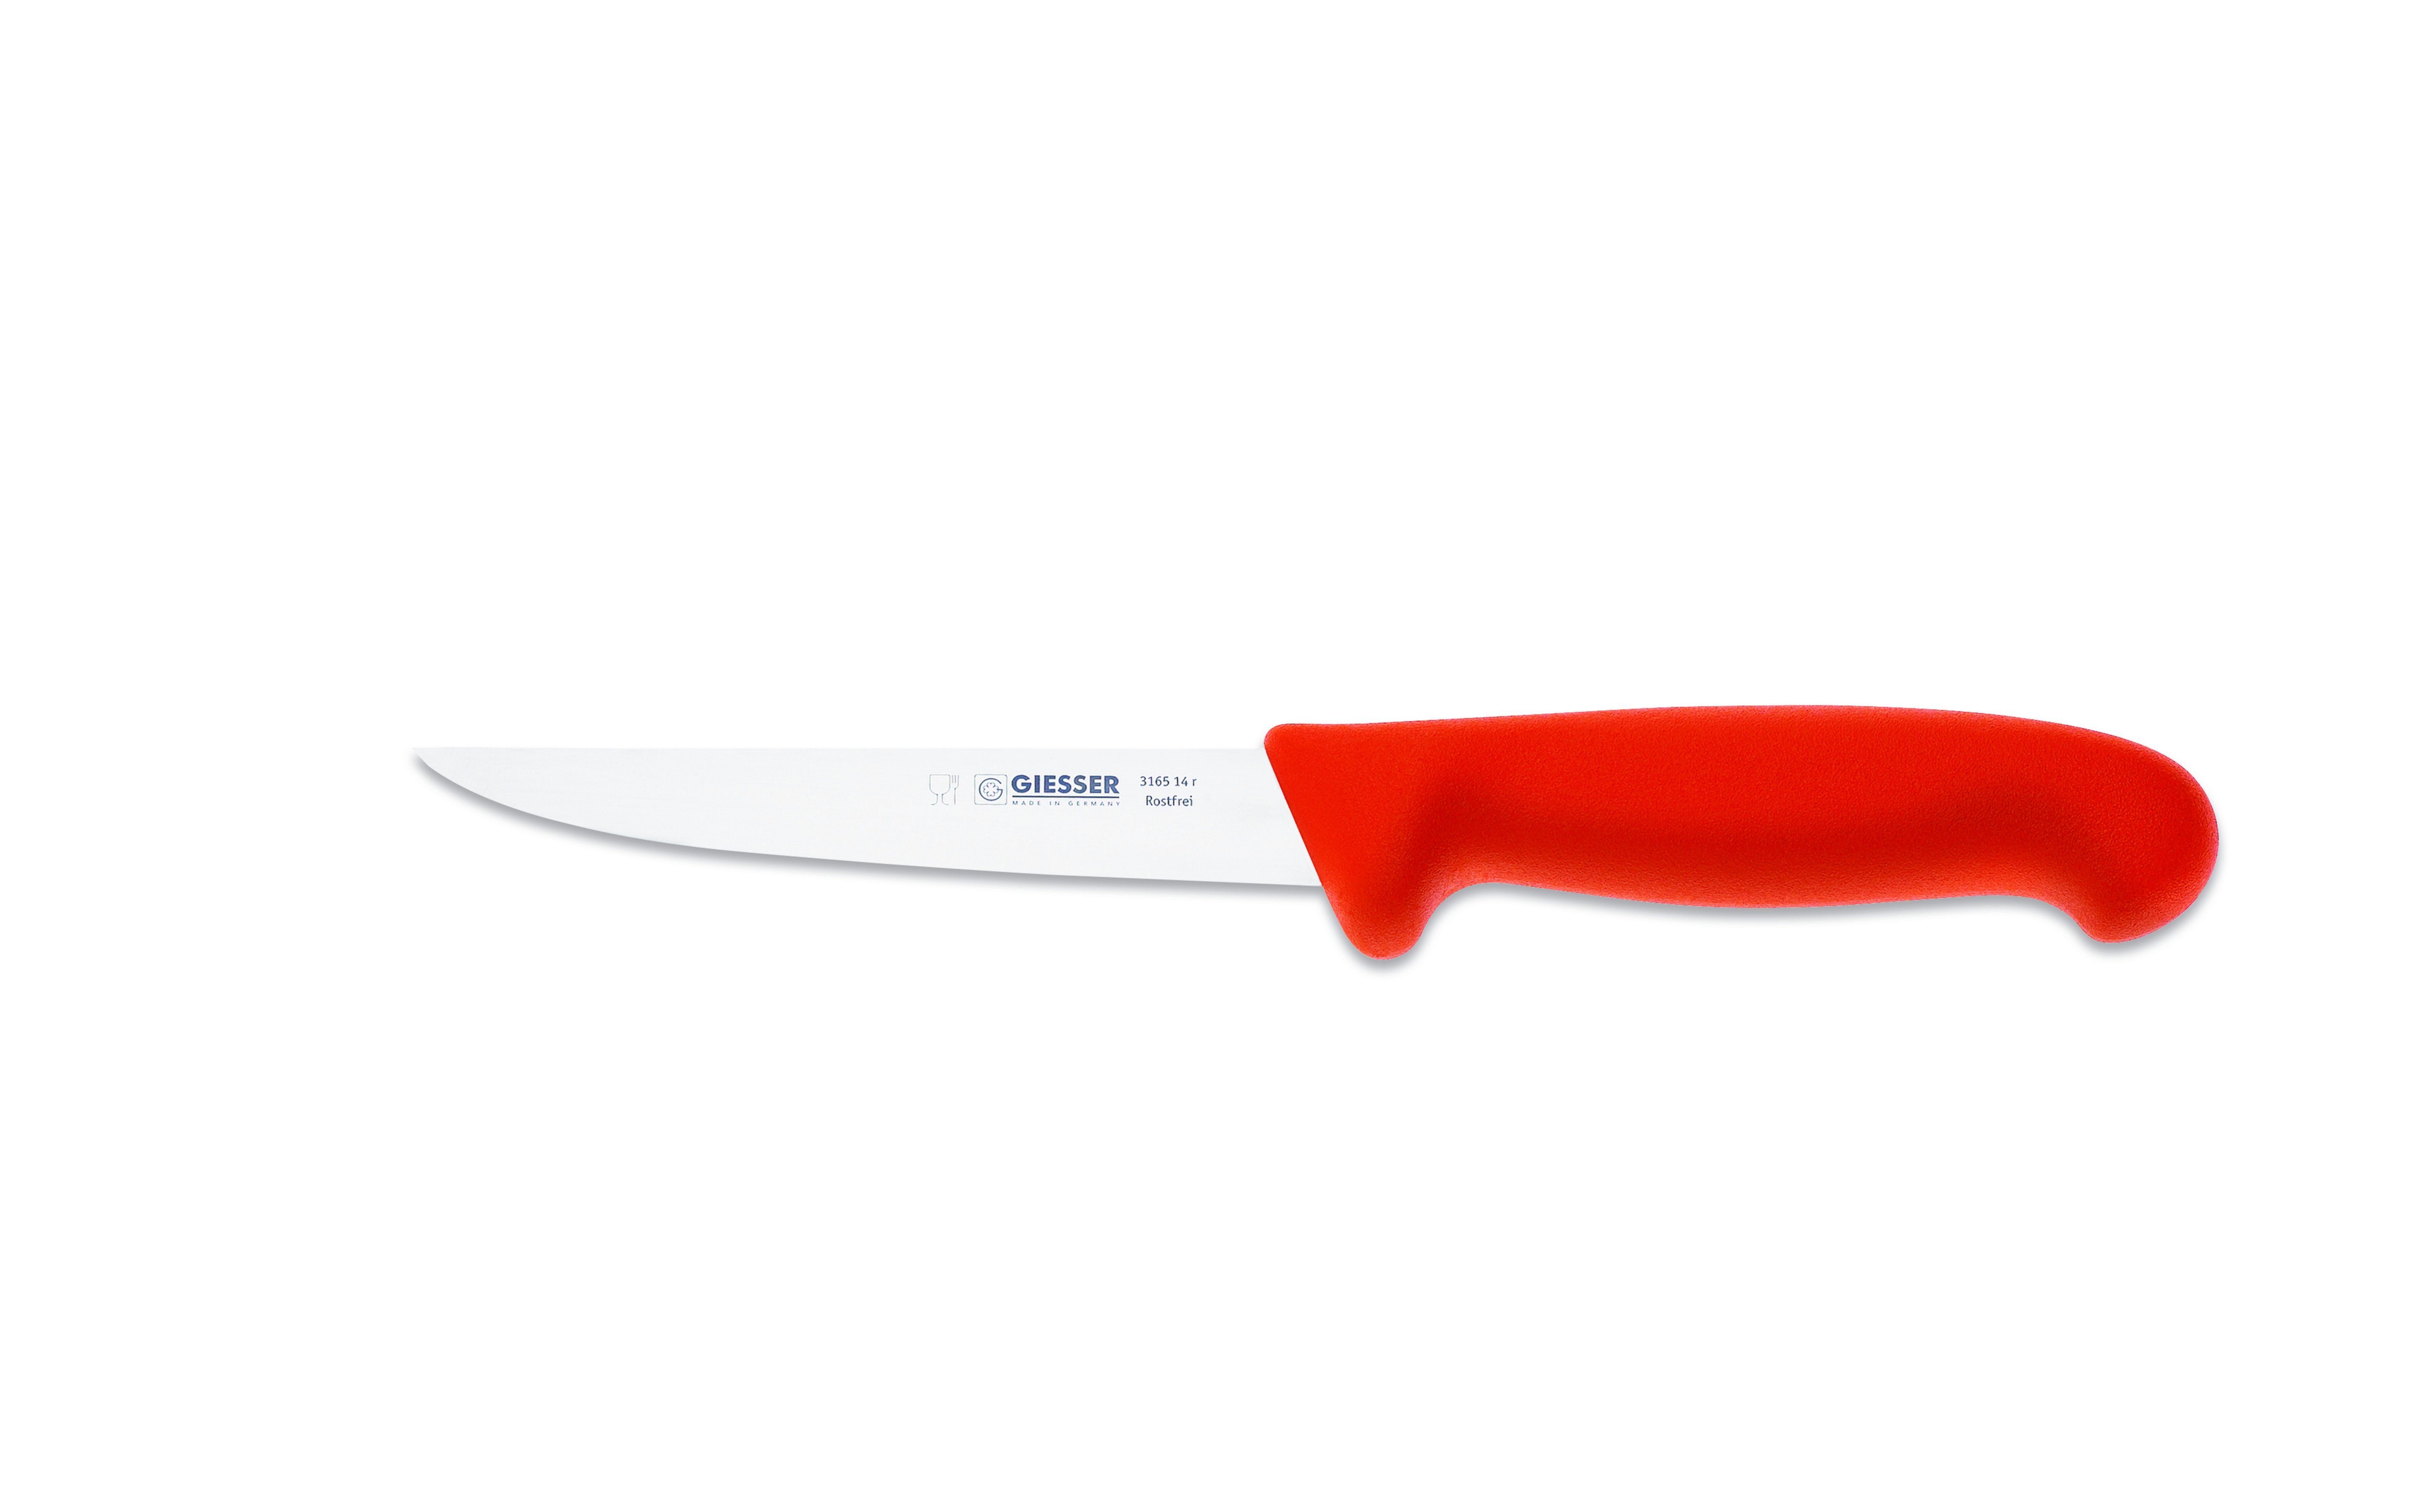 Giesser Messer Ausbeinmesser Variante Rot Klinge, 12/14/16/18, scharf gerade stark, 3165